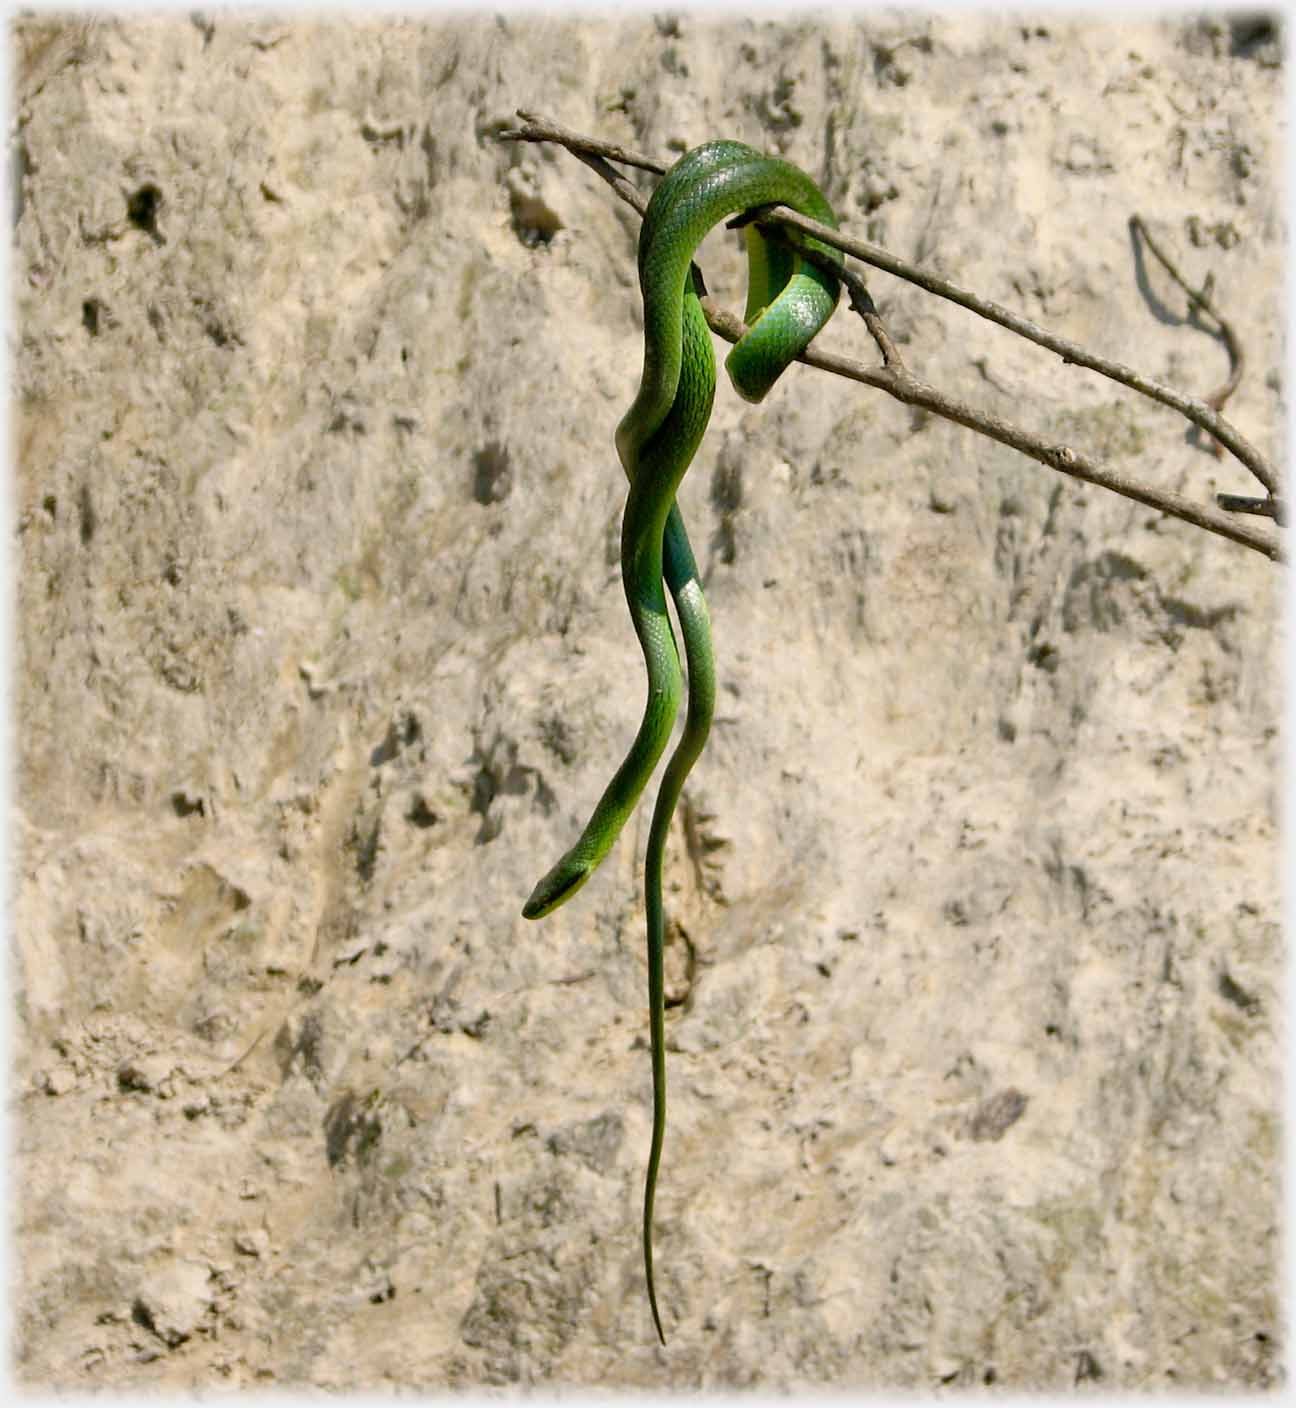 Green snake hanging on twig.